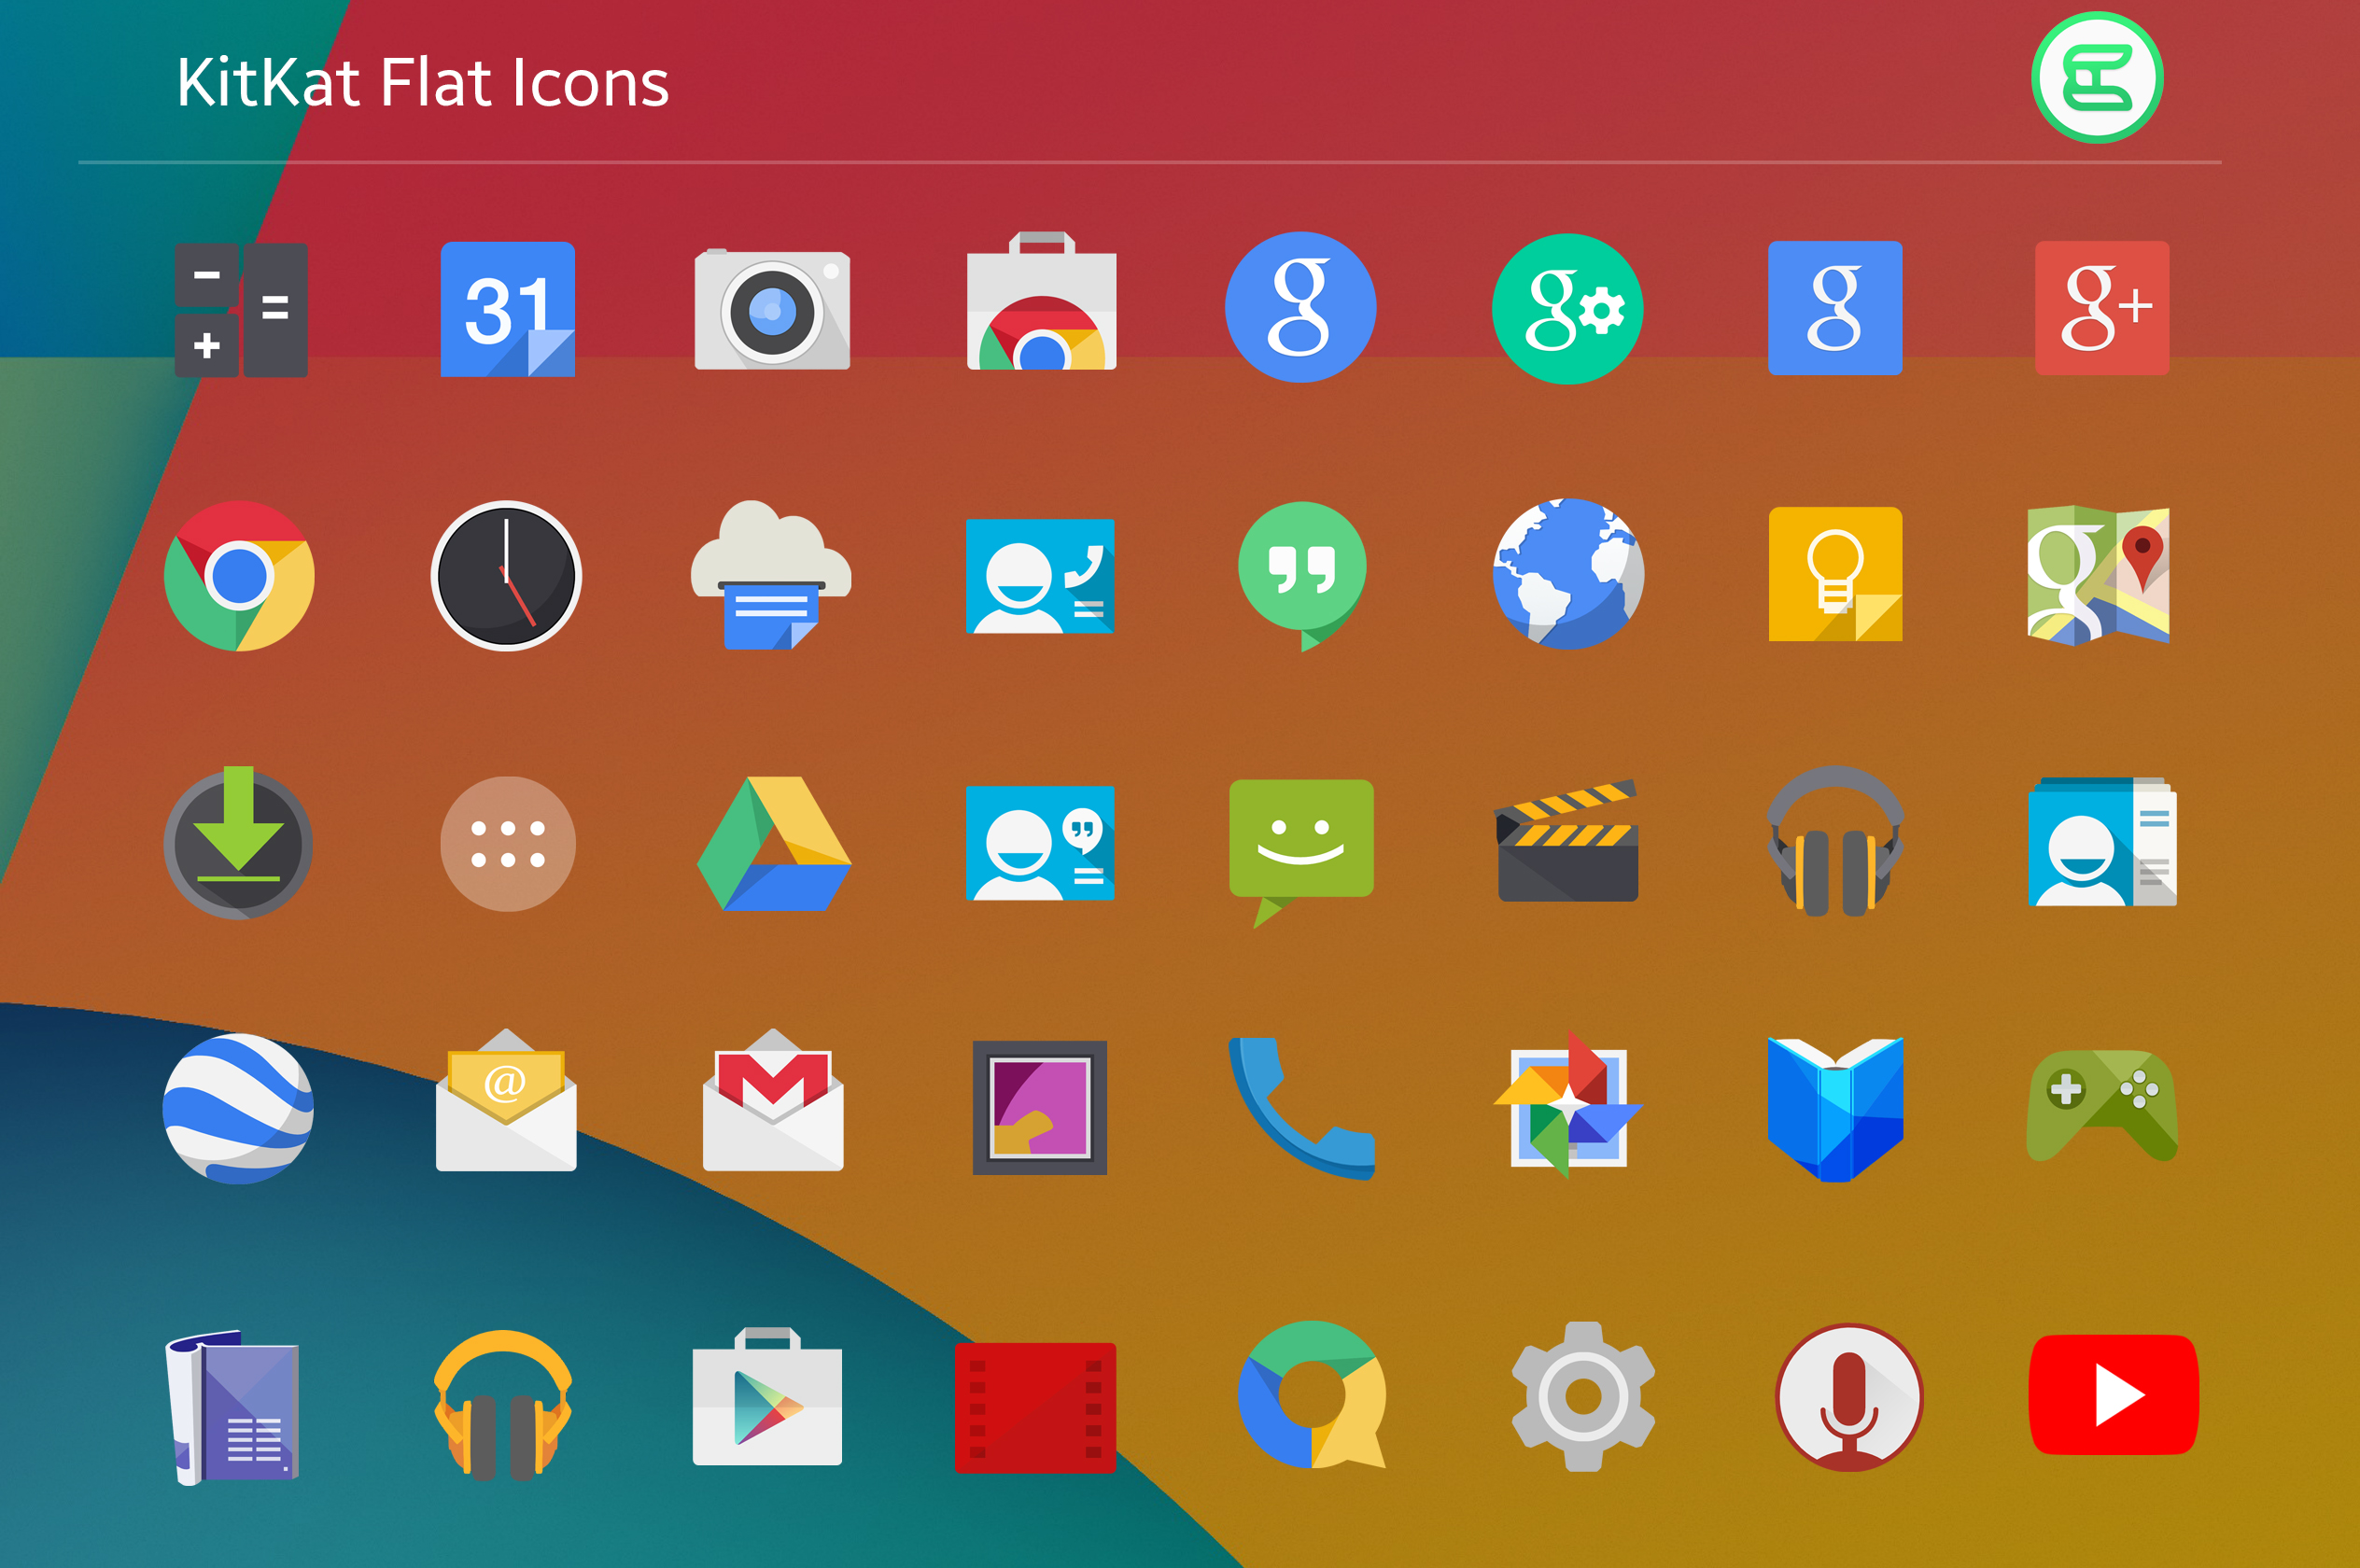 Kitkat Flat Icons